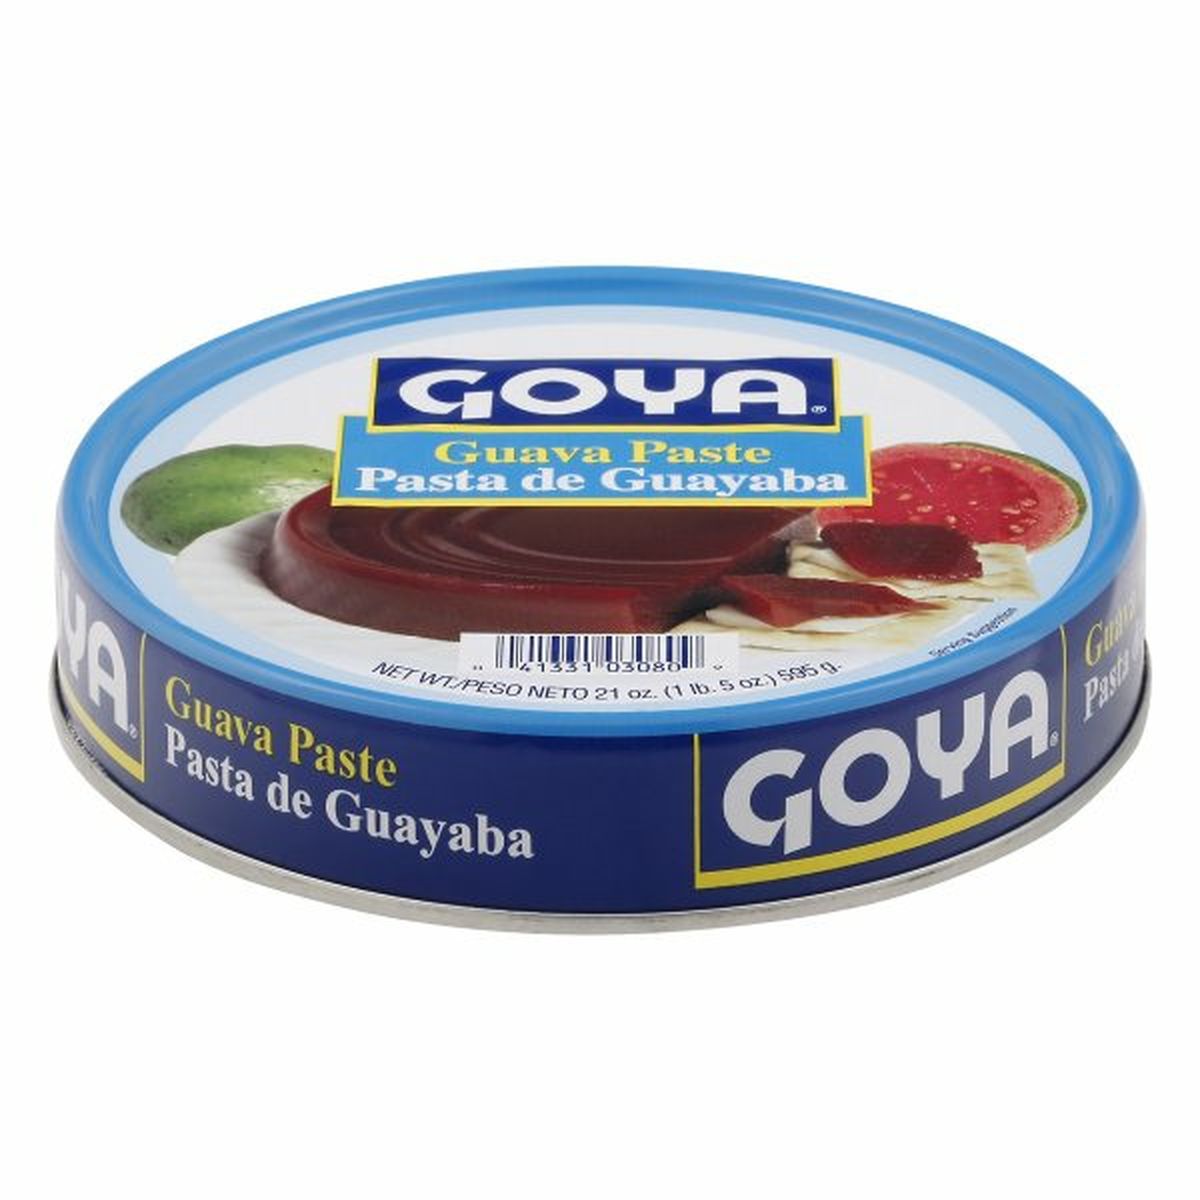 Calories in Goya Guava Paste